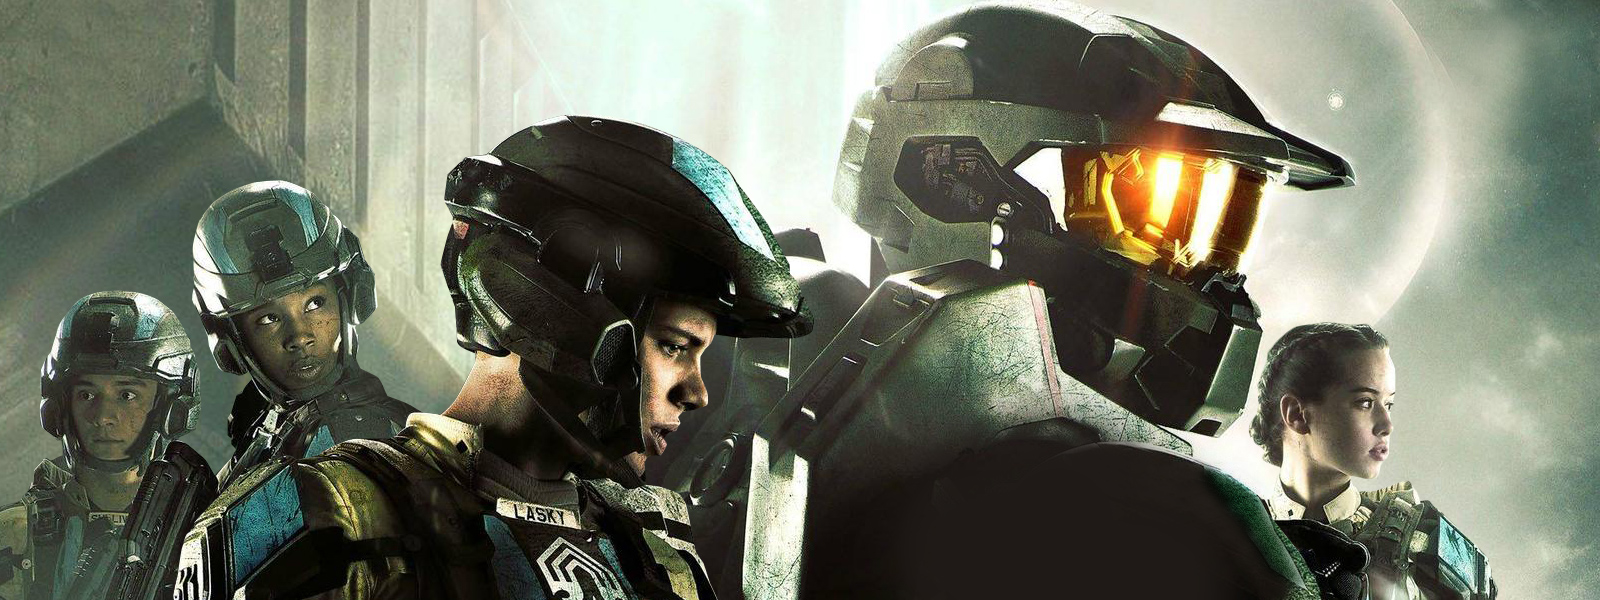 Halo 4: Forward Unto Dawn 1 Review